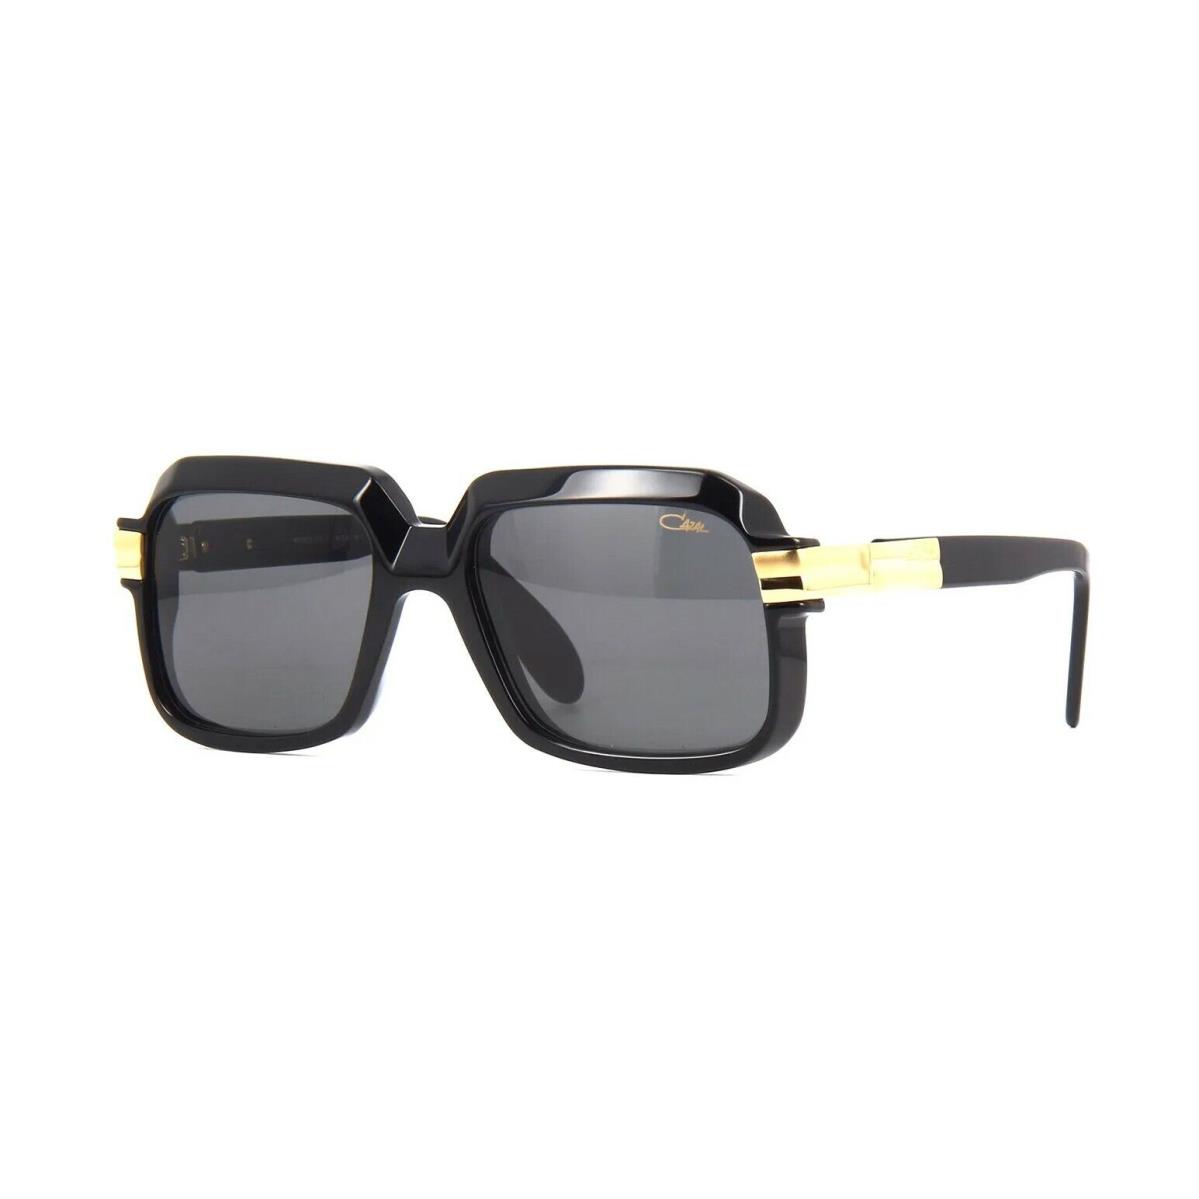 Cazal Legends 607/3 Black/grey 001 Sunglasses - Frame: Black, Lens: Grey